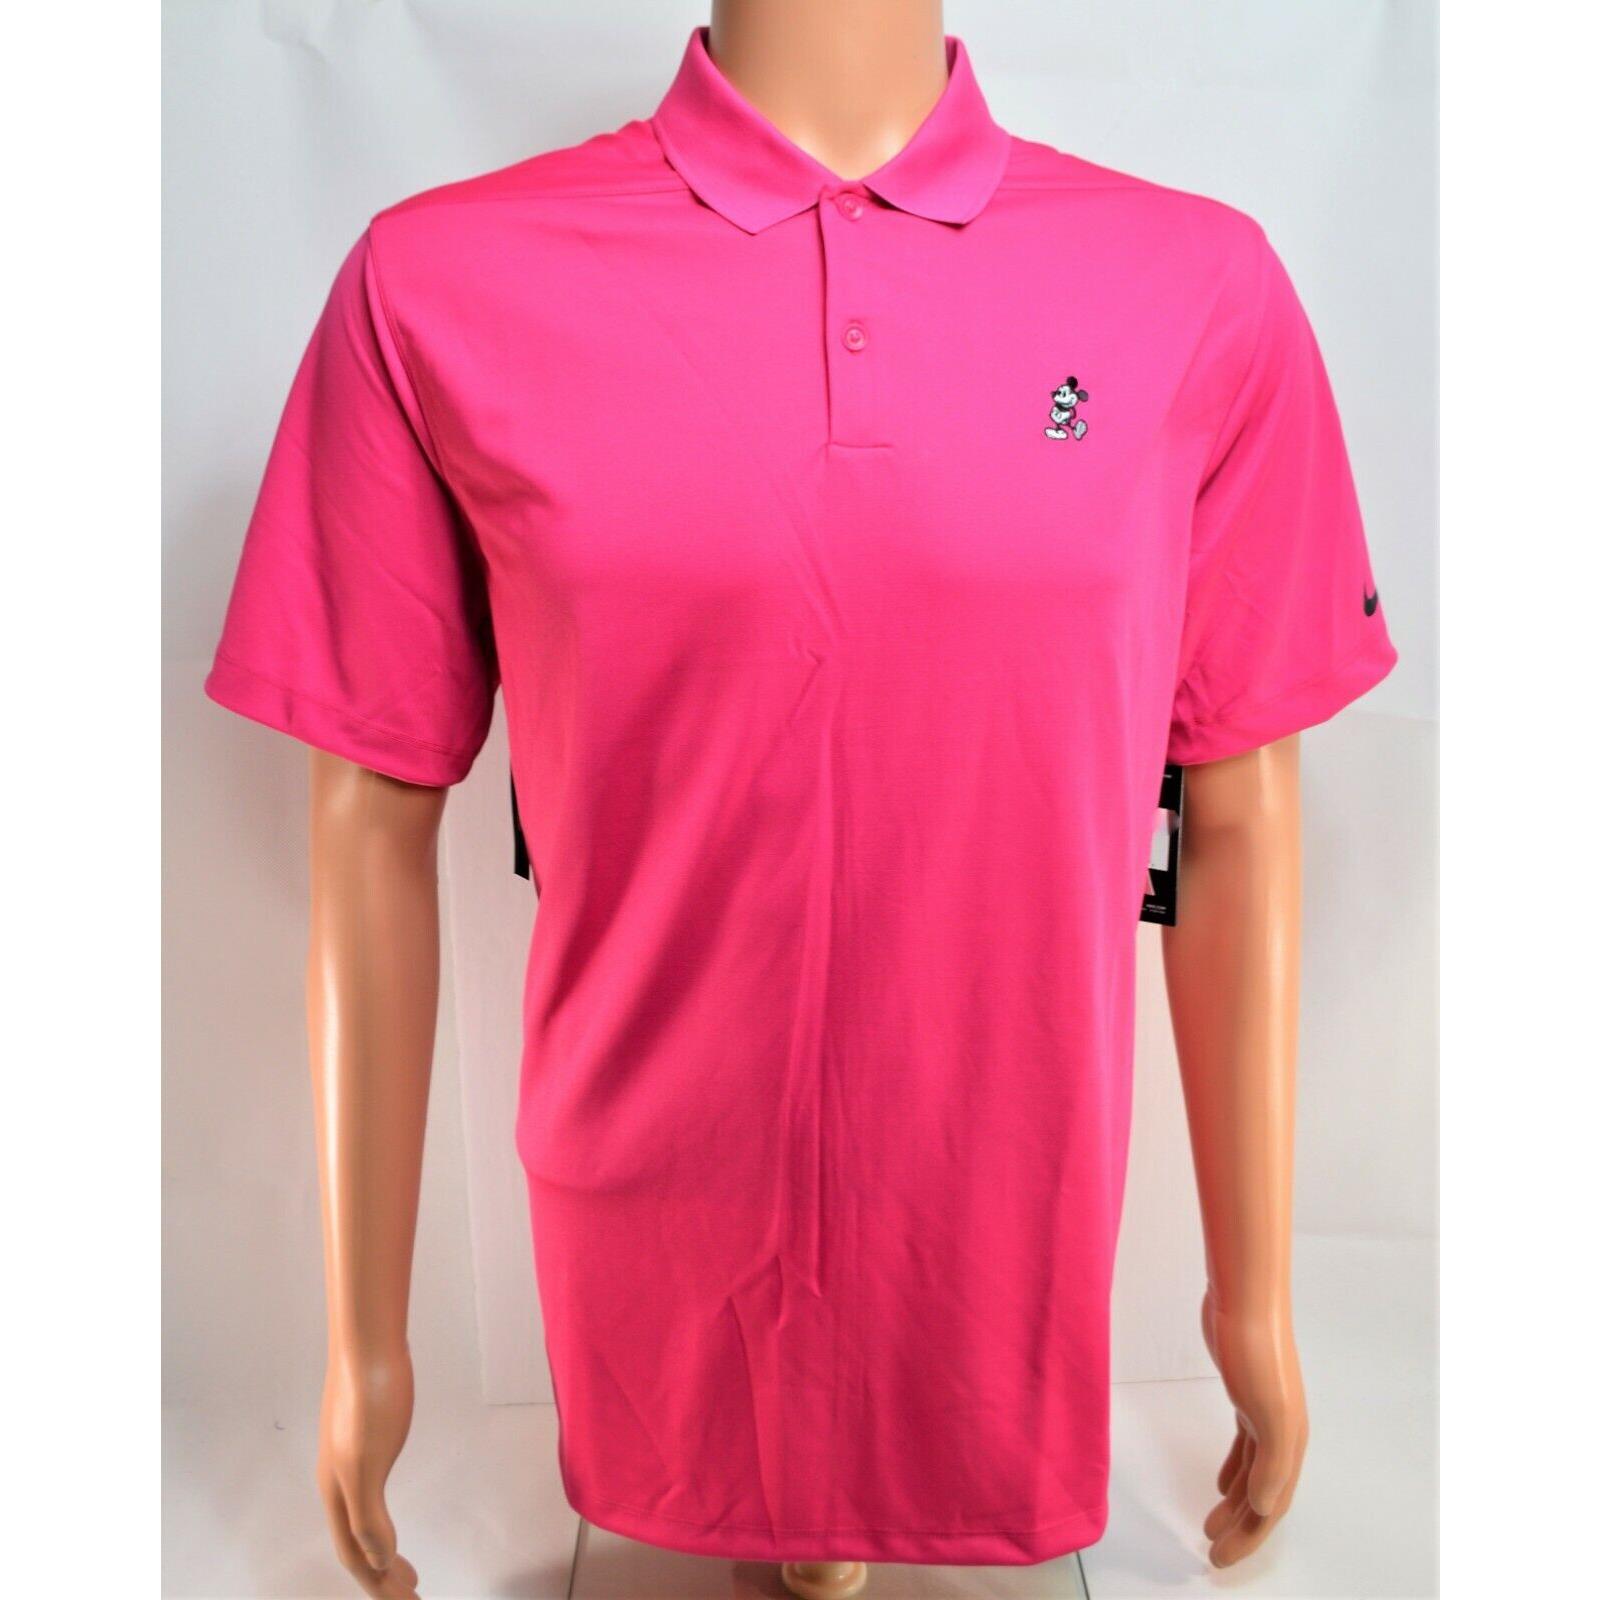 Disney Exclusive Nike Golf Pink Polo Shirt Sz XX Large Xxl 891881 616 Rare